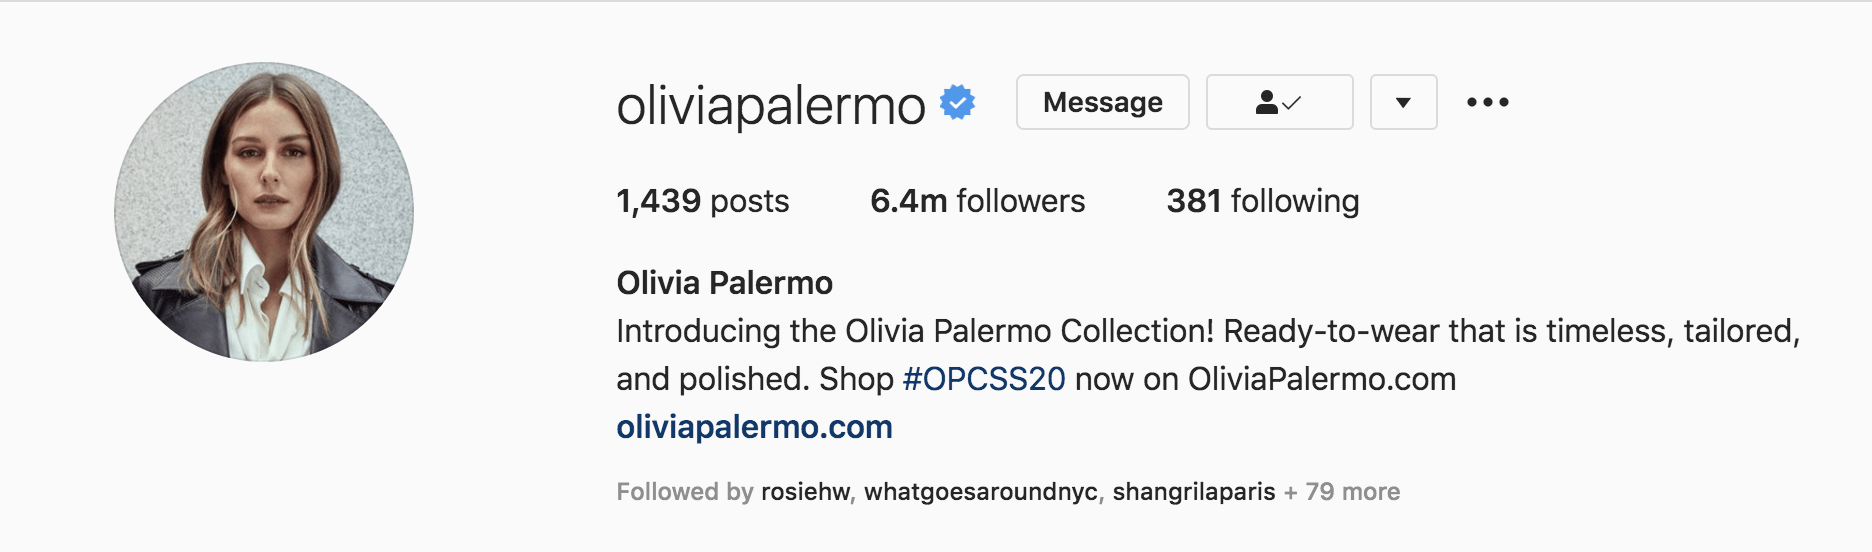 Top Fashion Influencers - Olivia Palermo